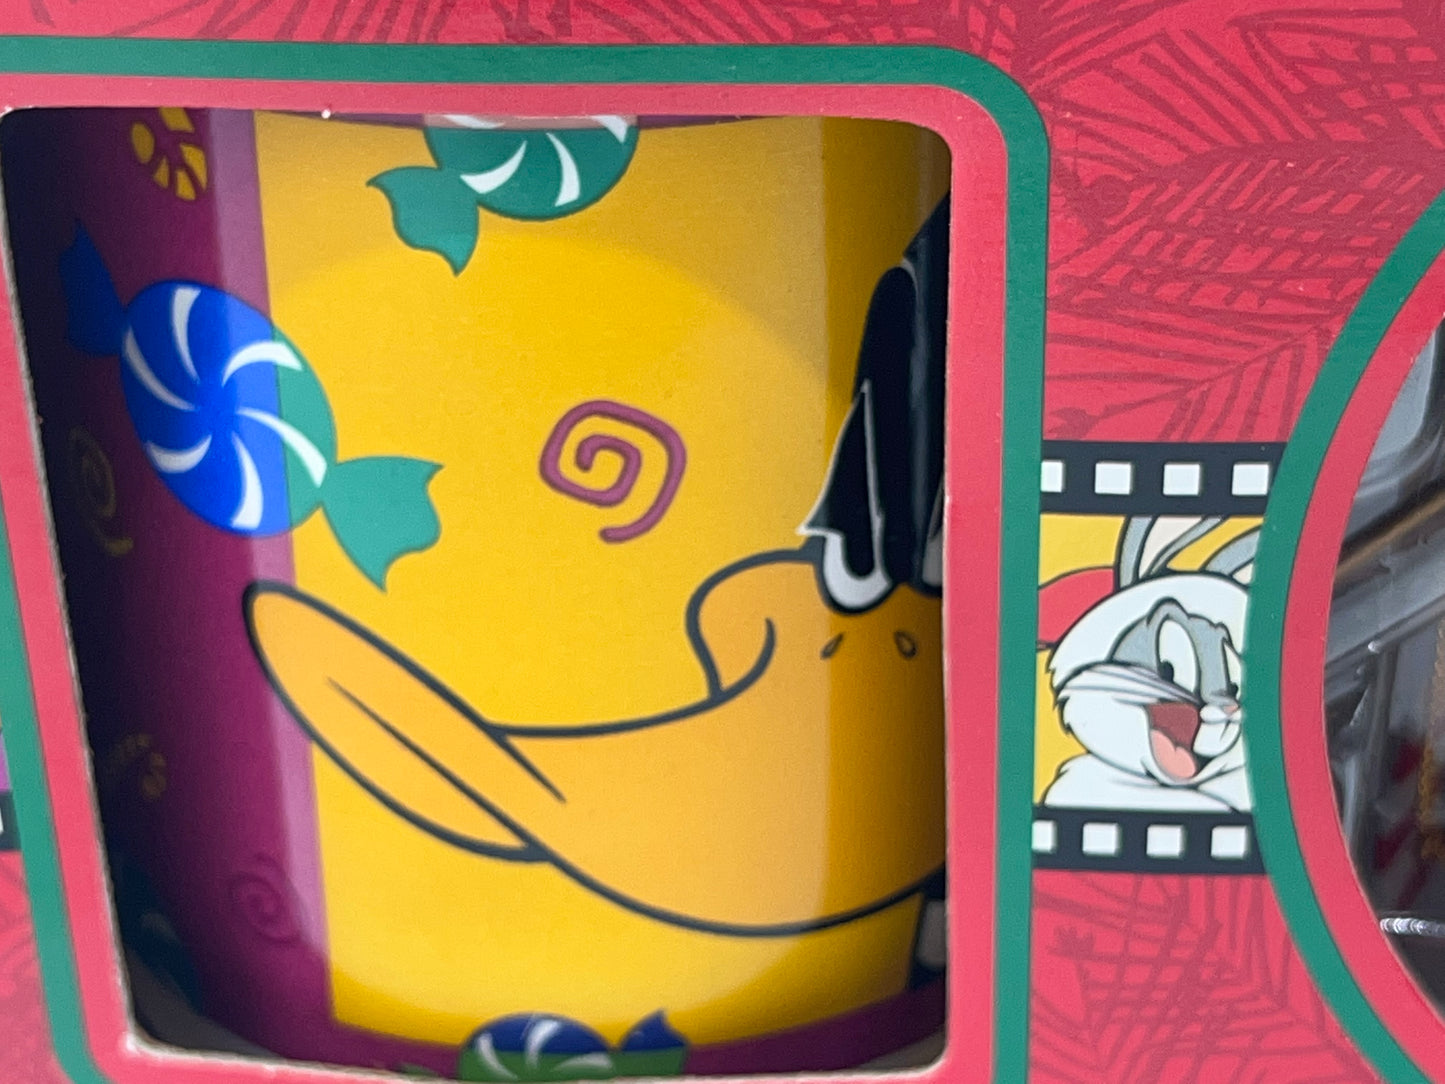 Looney Tunes Warner Bros. Daffy Duck Collectible Mug & Ornament New in Box NIB